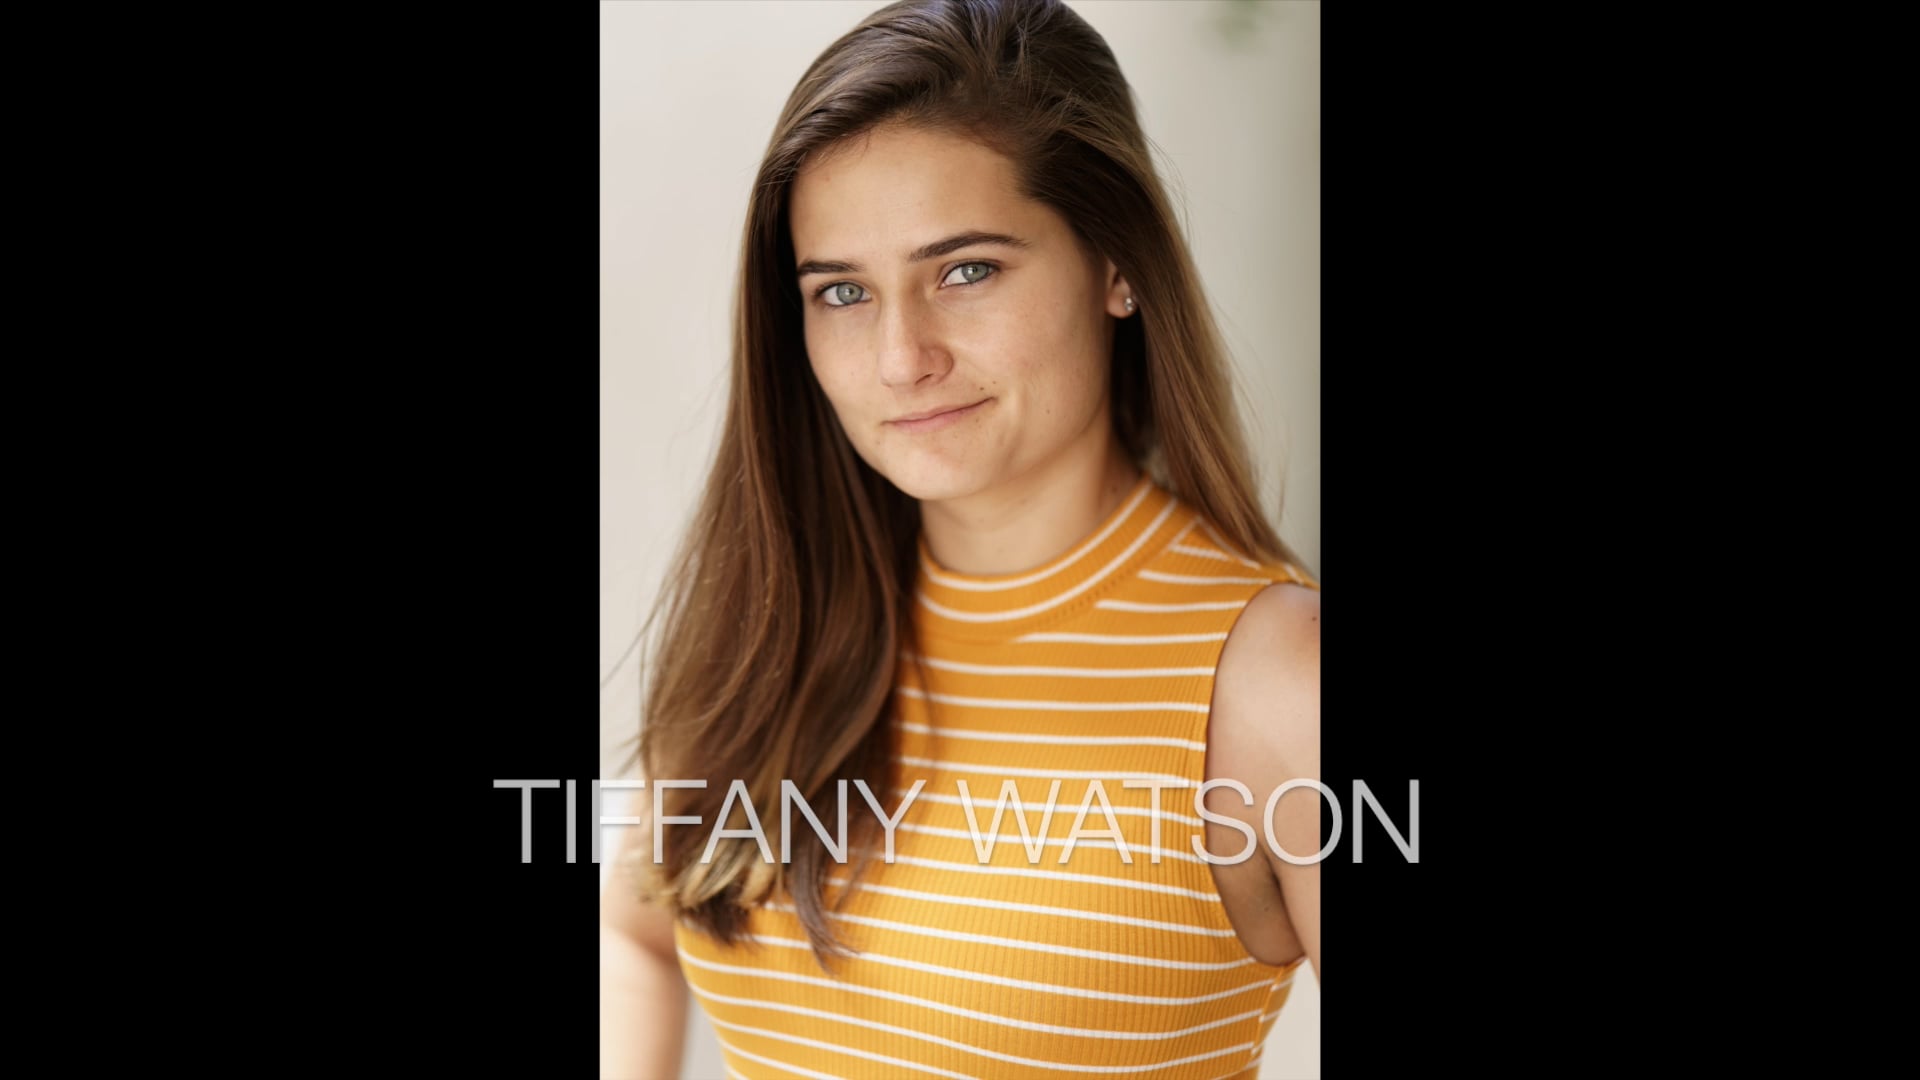 Tiffany watson фото вк